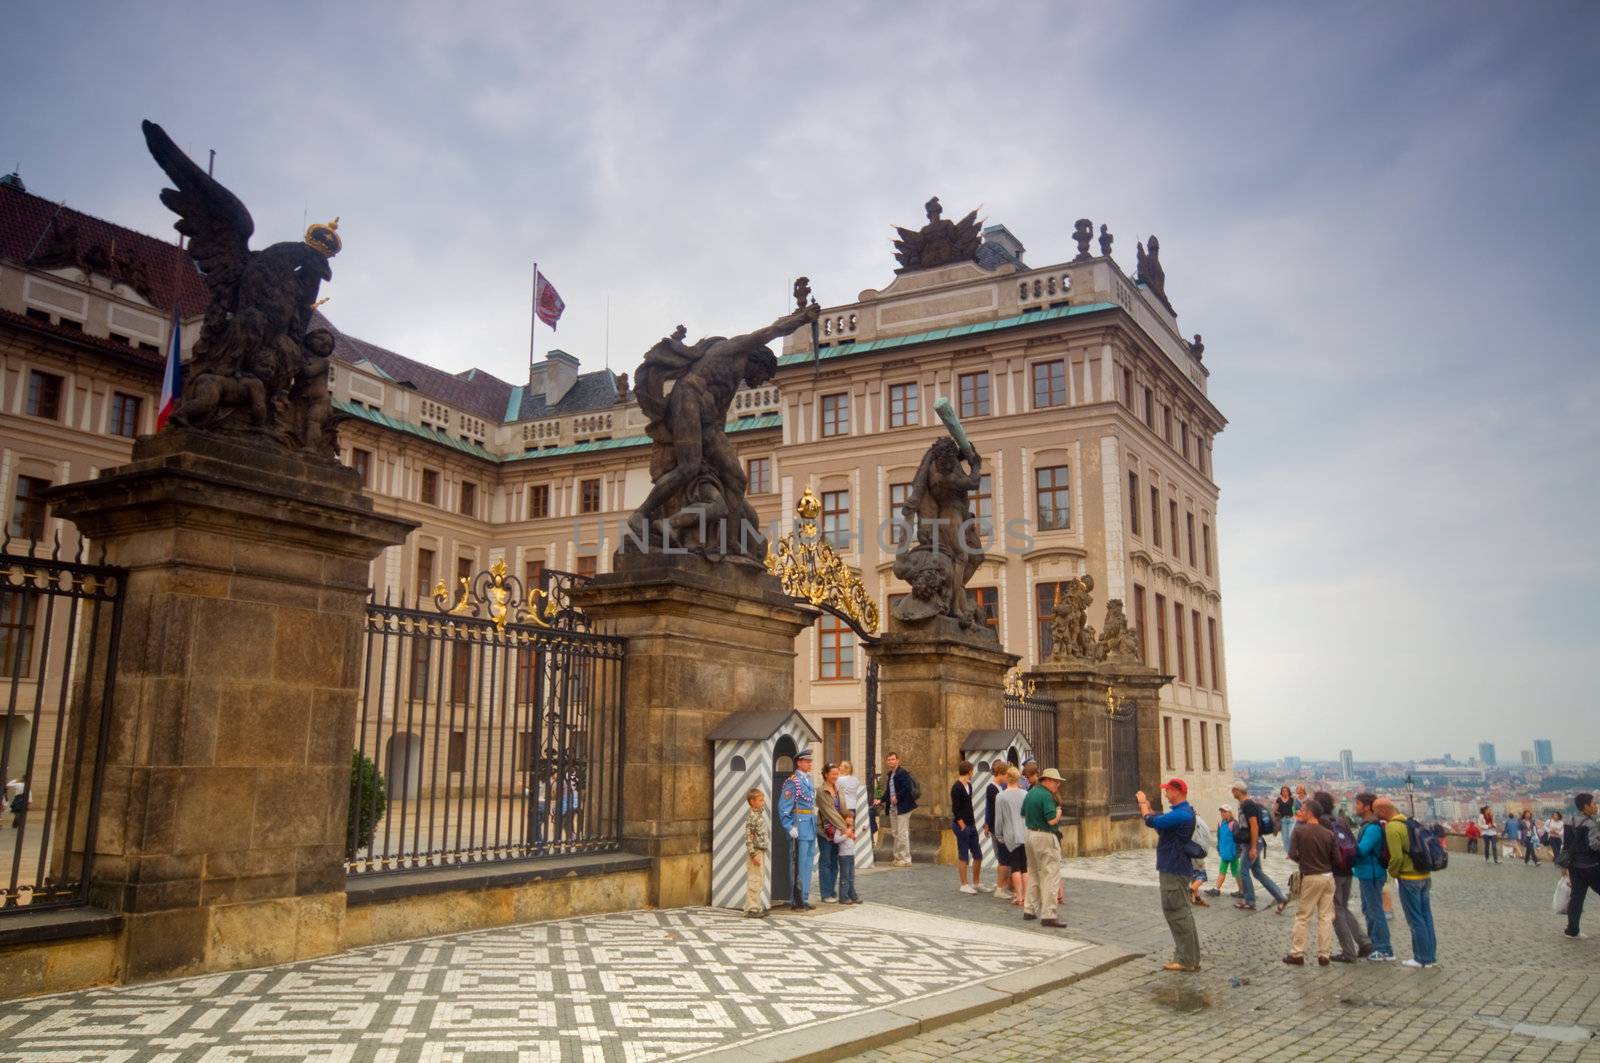 The entrance to the Prague's castle